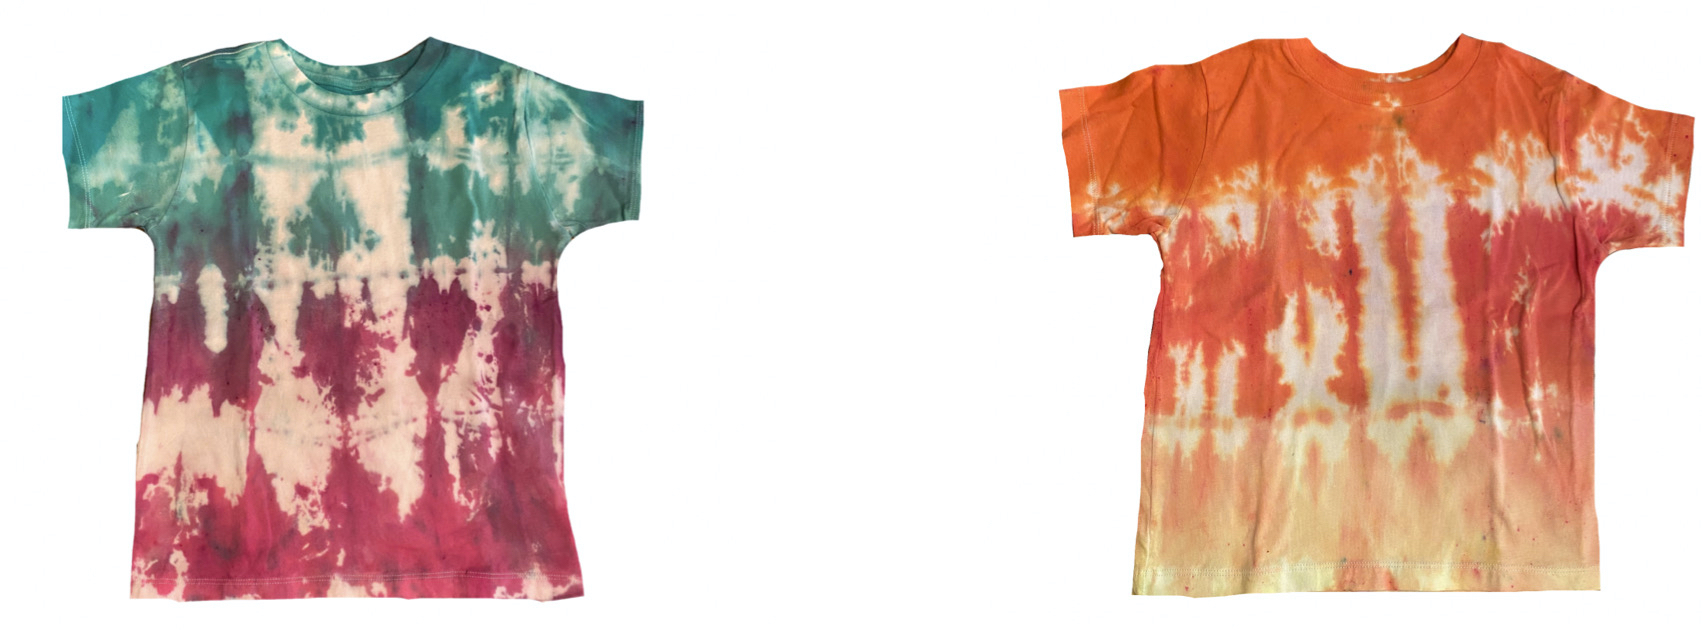 A Wolffer Girls tie-dye shirts. 